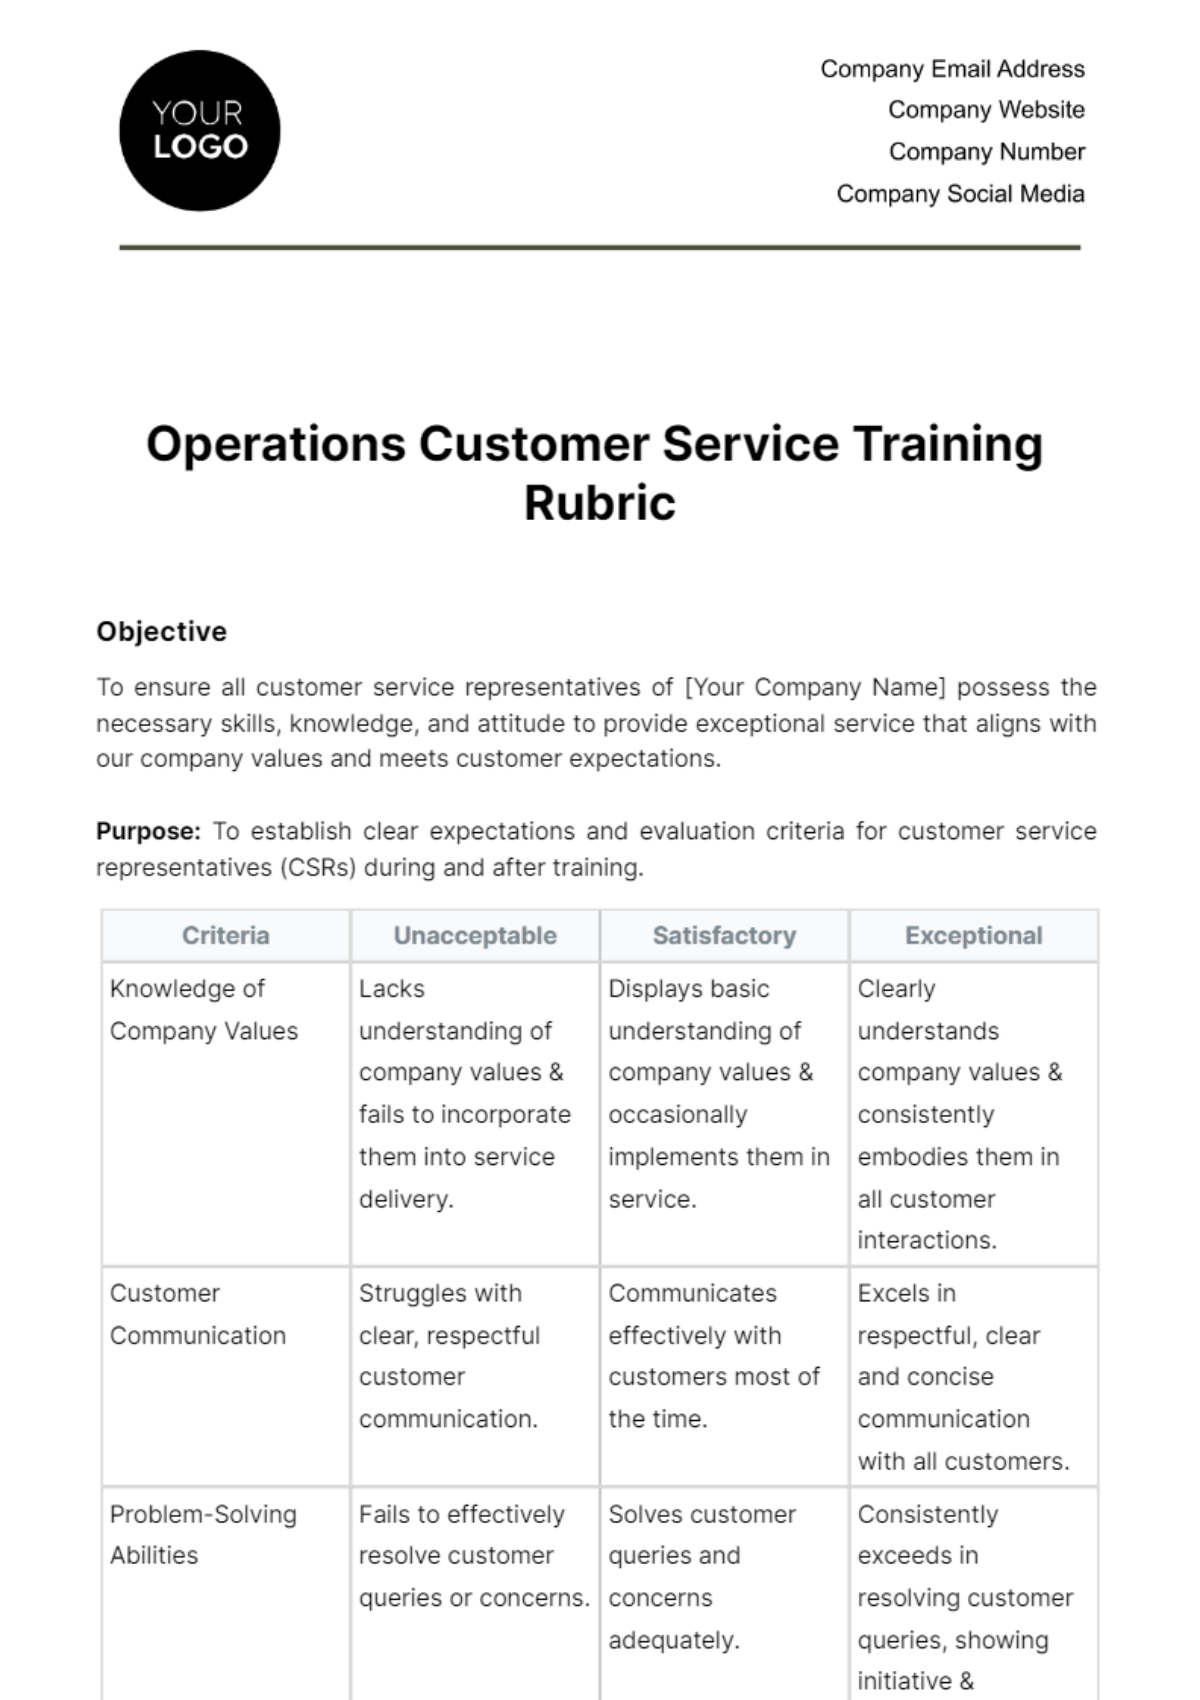 Free Operations Customer Service Training Rubric Template